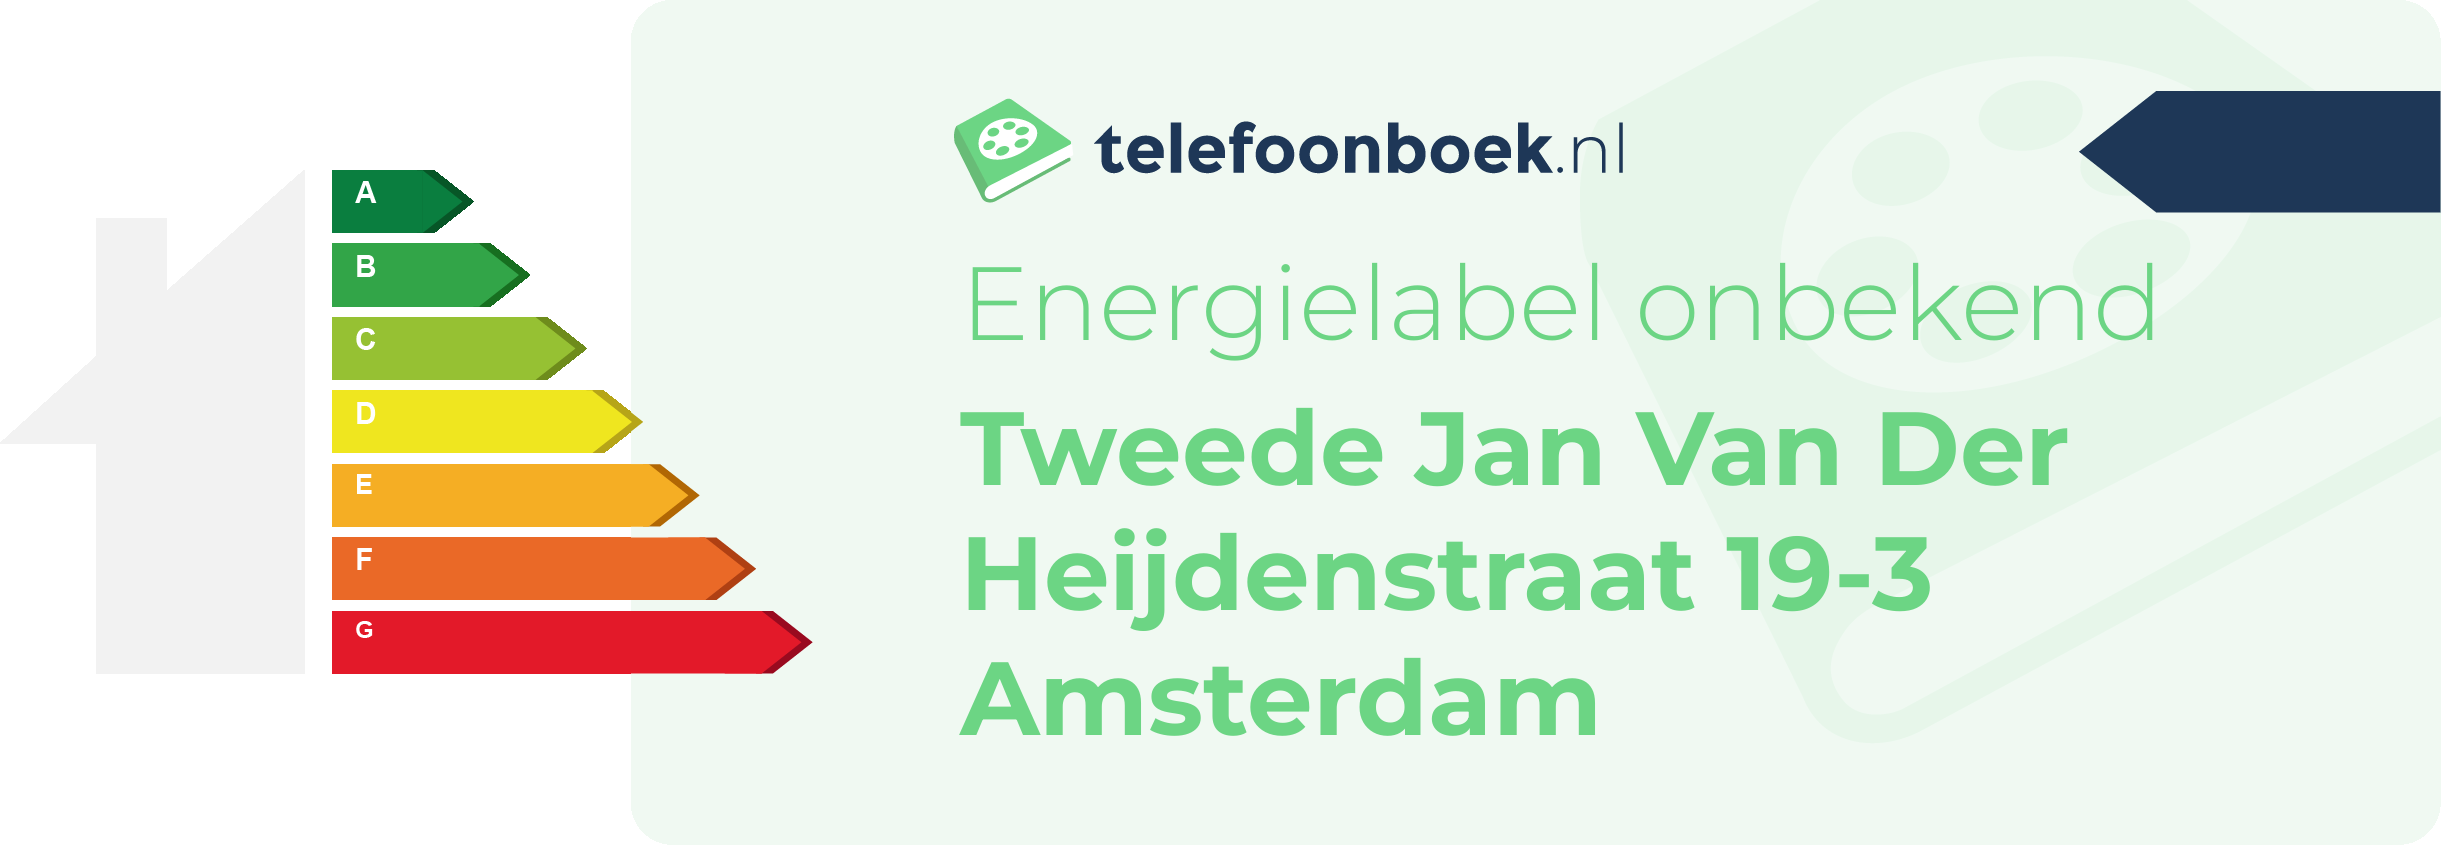 Energielabel Tweede Jan Van Der Heijdenstraat 19-3 Amsterdam